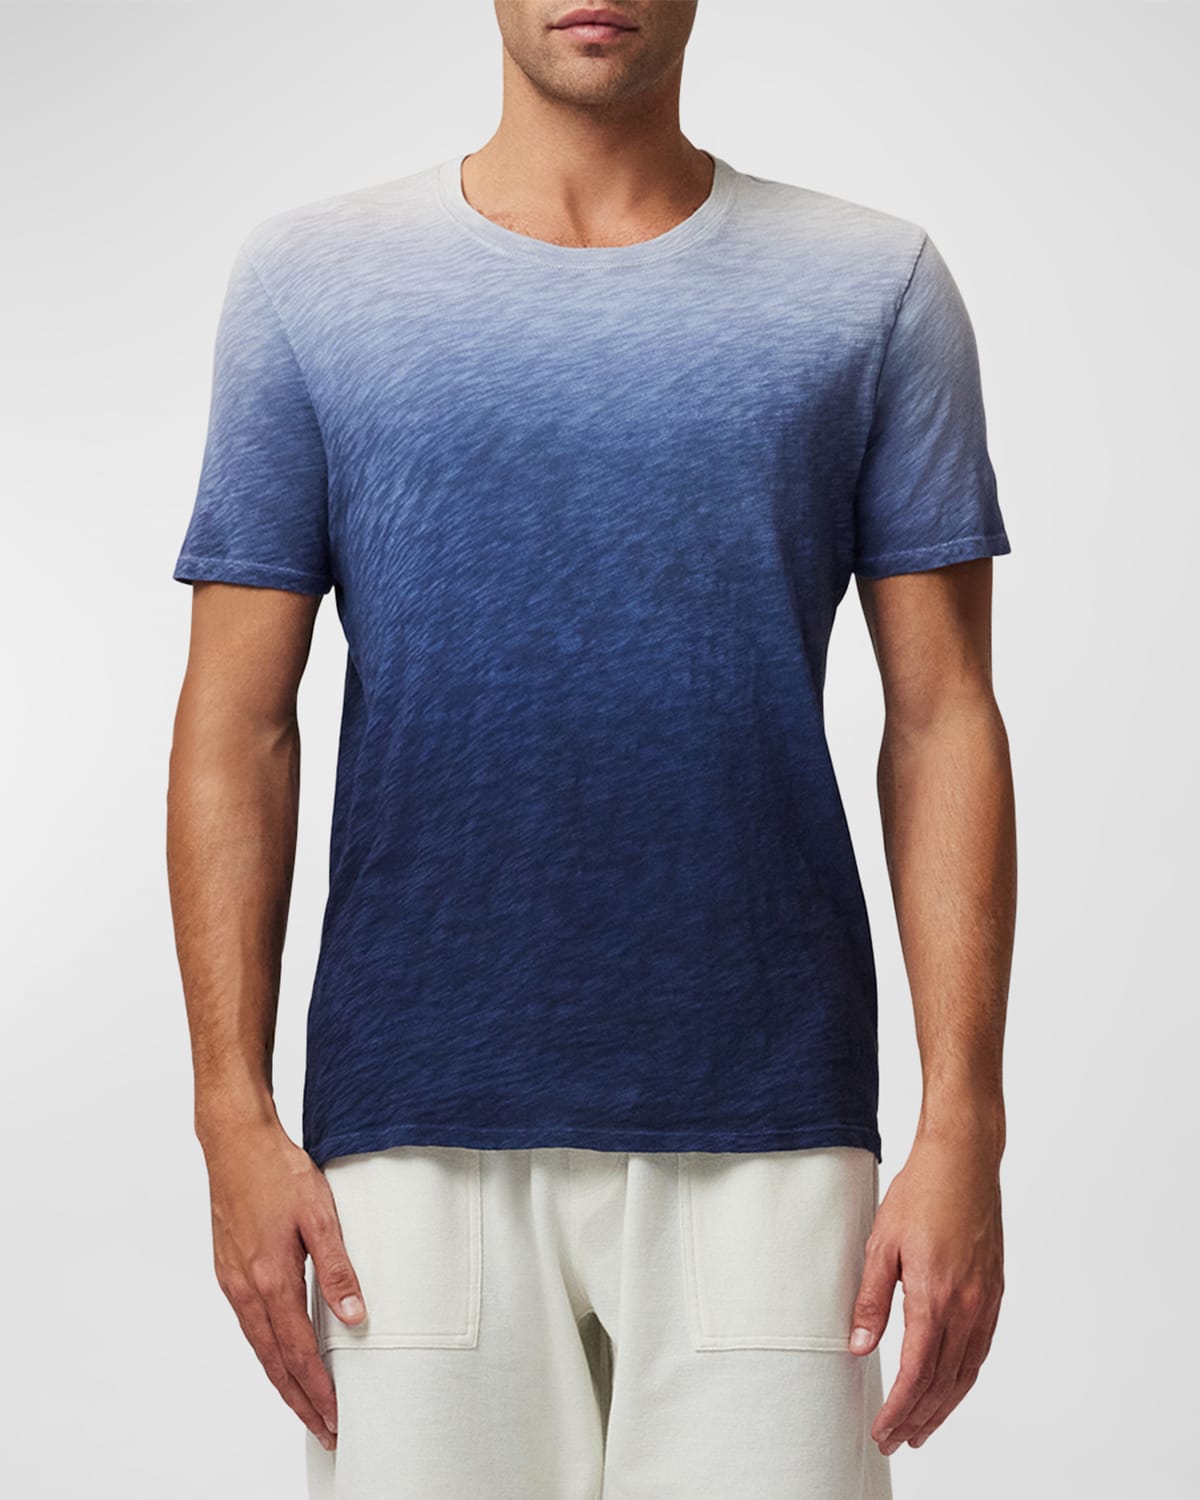 Men's Ombre Slub Jersey Short-Sleeve T-Shirt